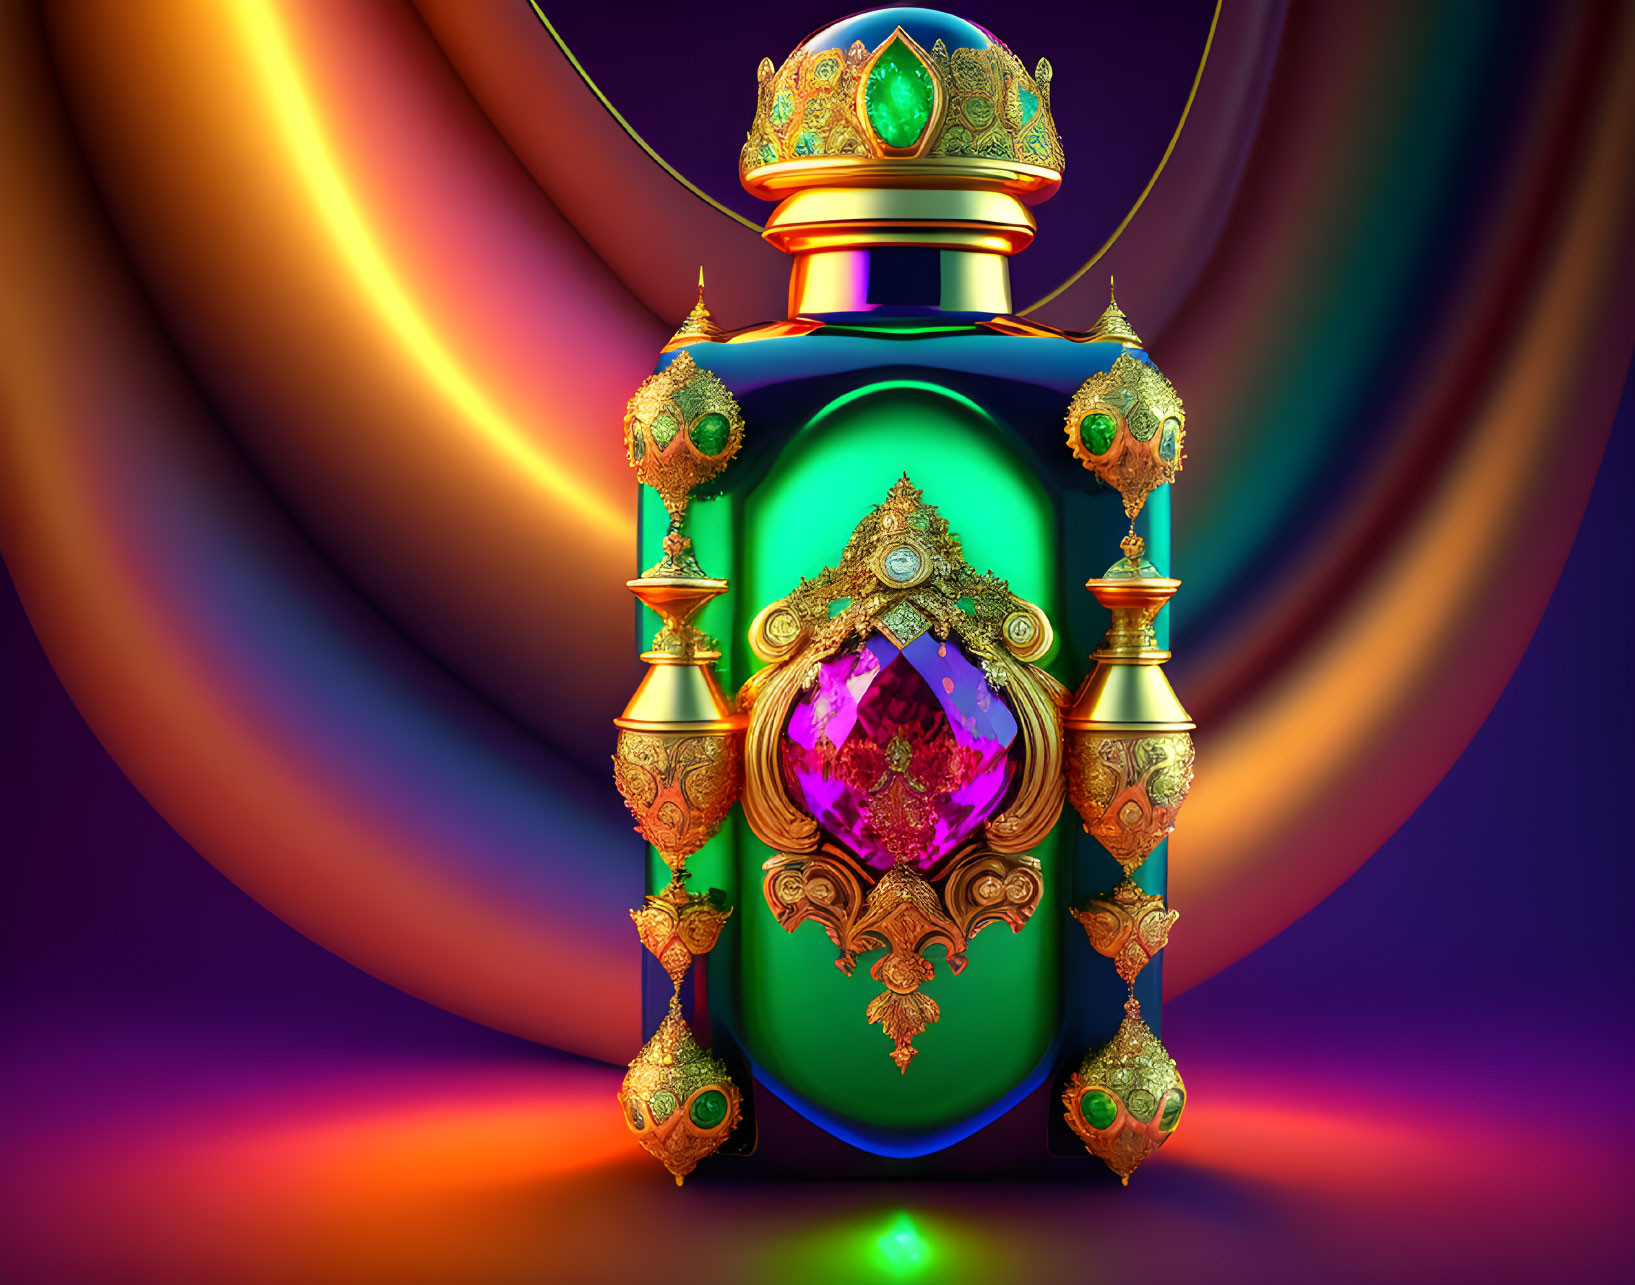 Regal perfume bottle 3D illustration with gold filigree and purple gem